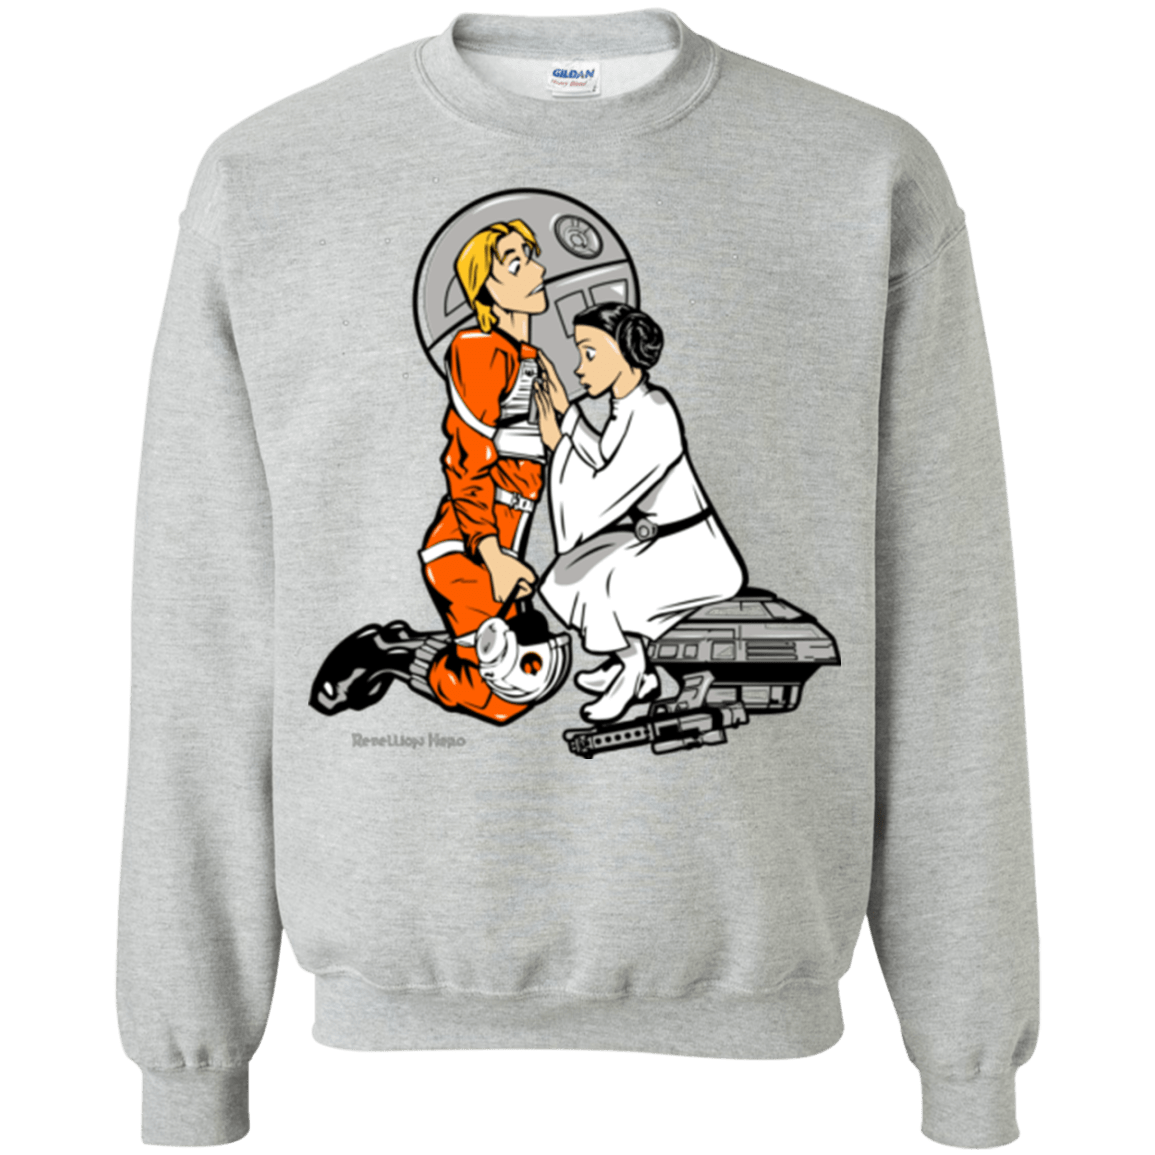 Sweatshirts Sport Grey / Small Rebellon Hero Crewneck Sweatshirt